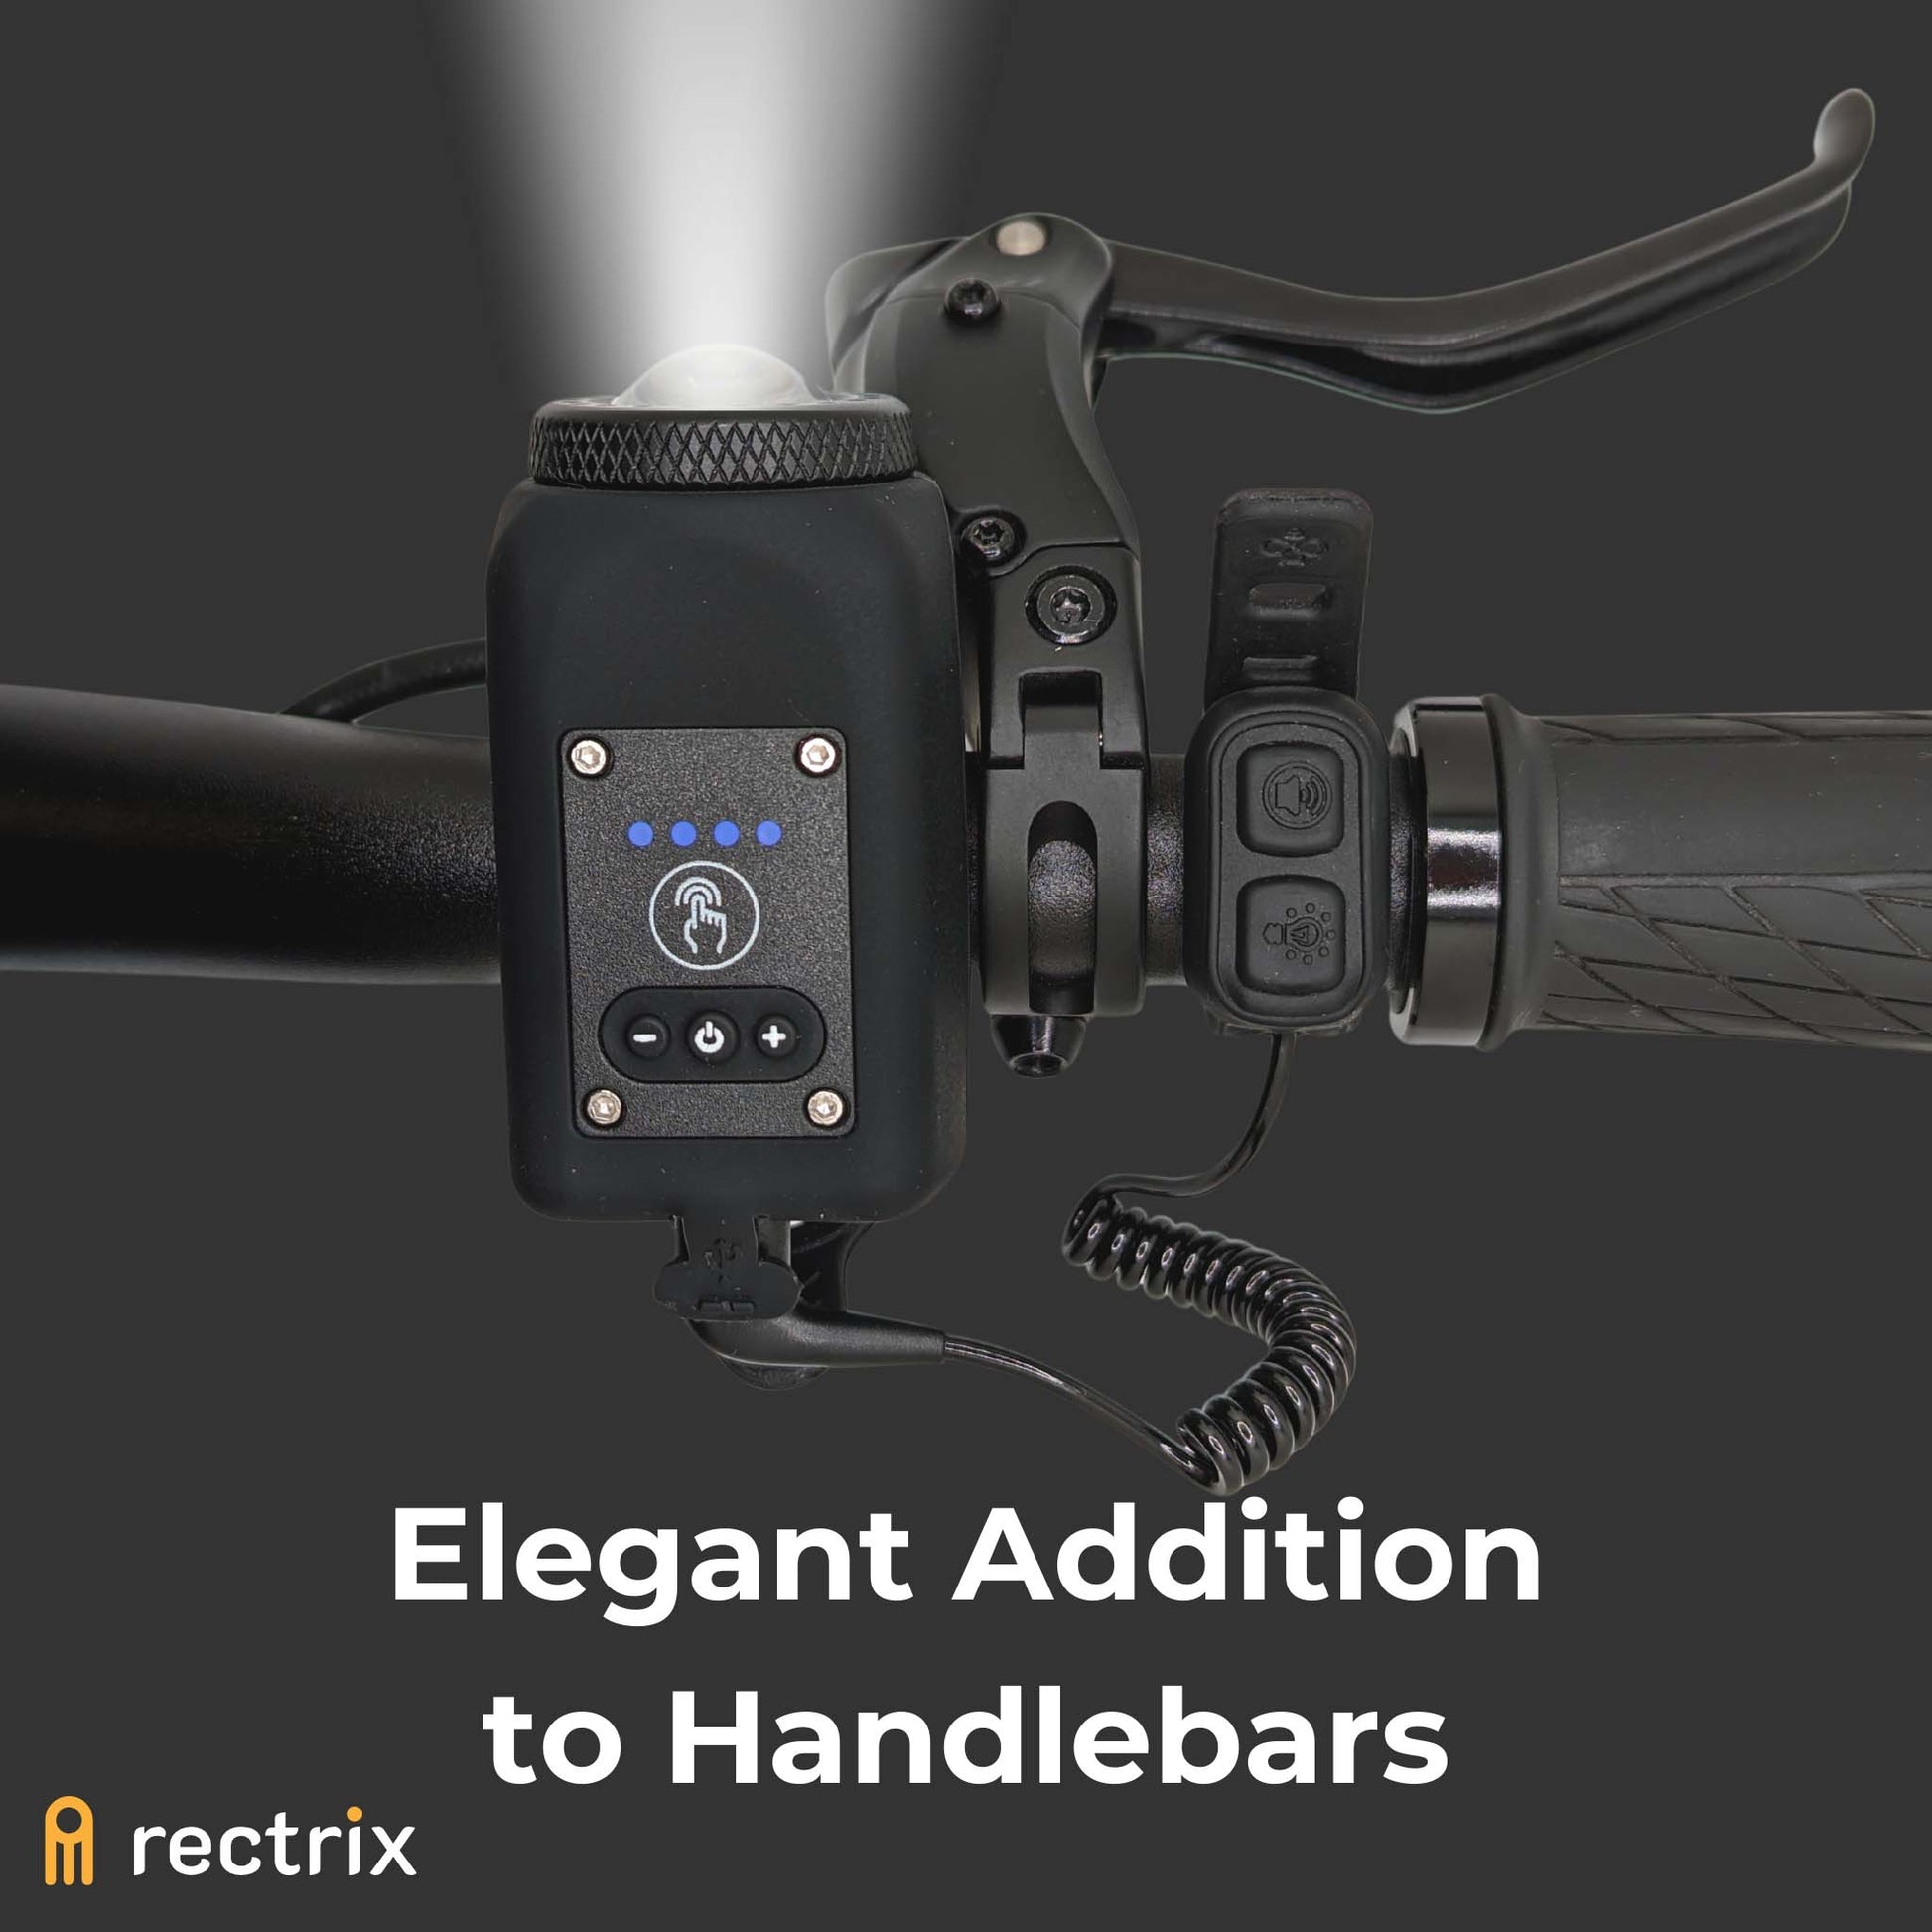 Emphasizing the product's stylish presence on a bicycle's handlebar